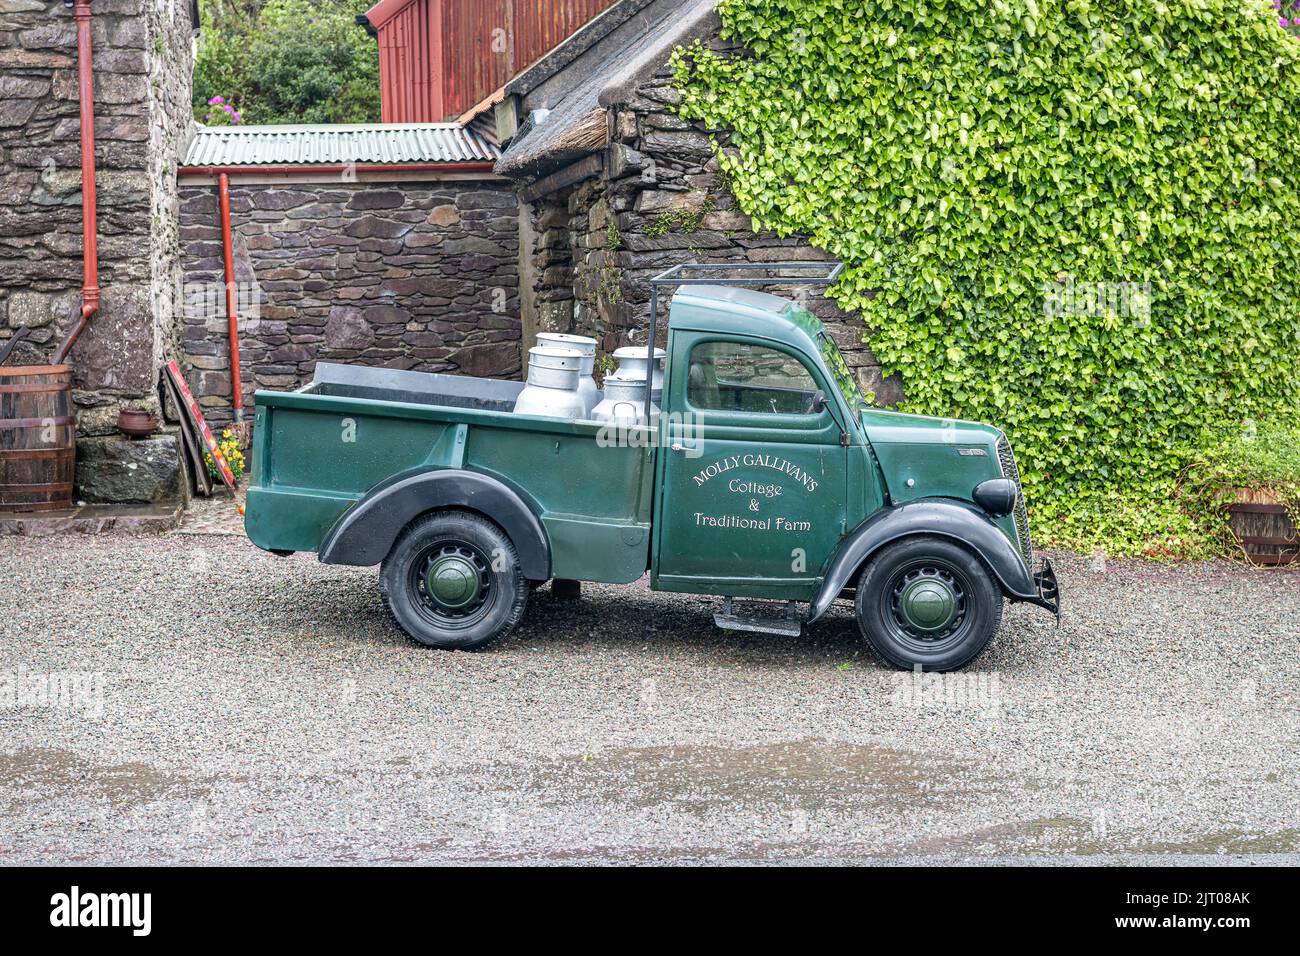 Historic Delivery Van at Molly Gallivan’s, County Kerry, Ireland Stock Photo